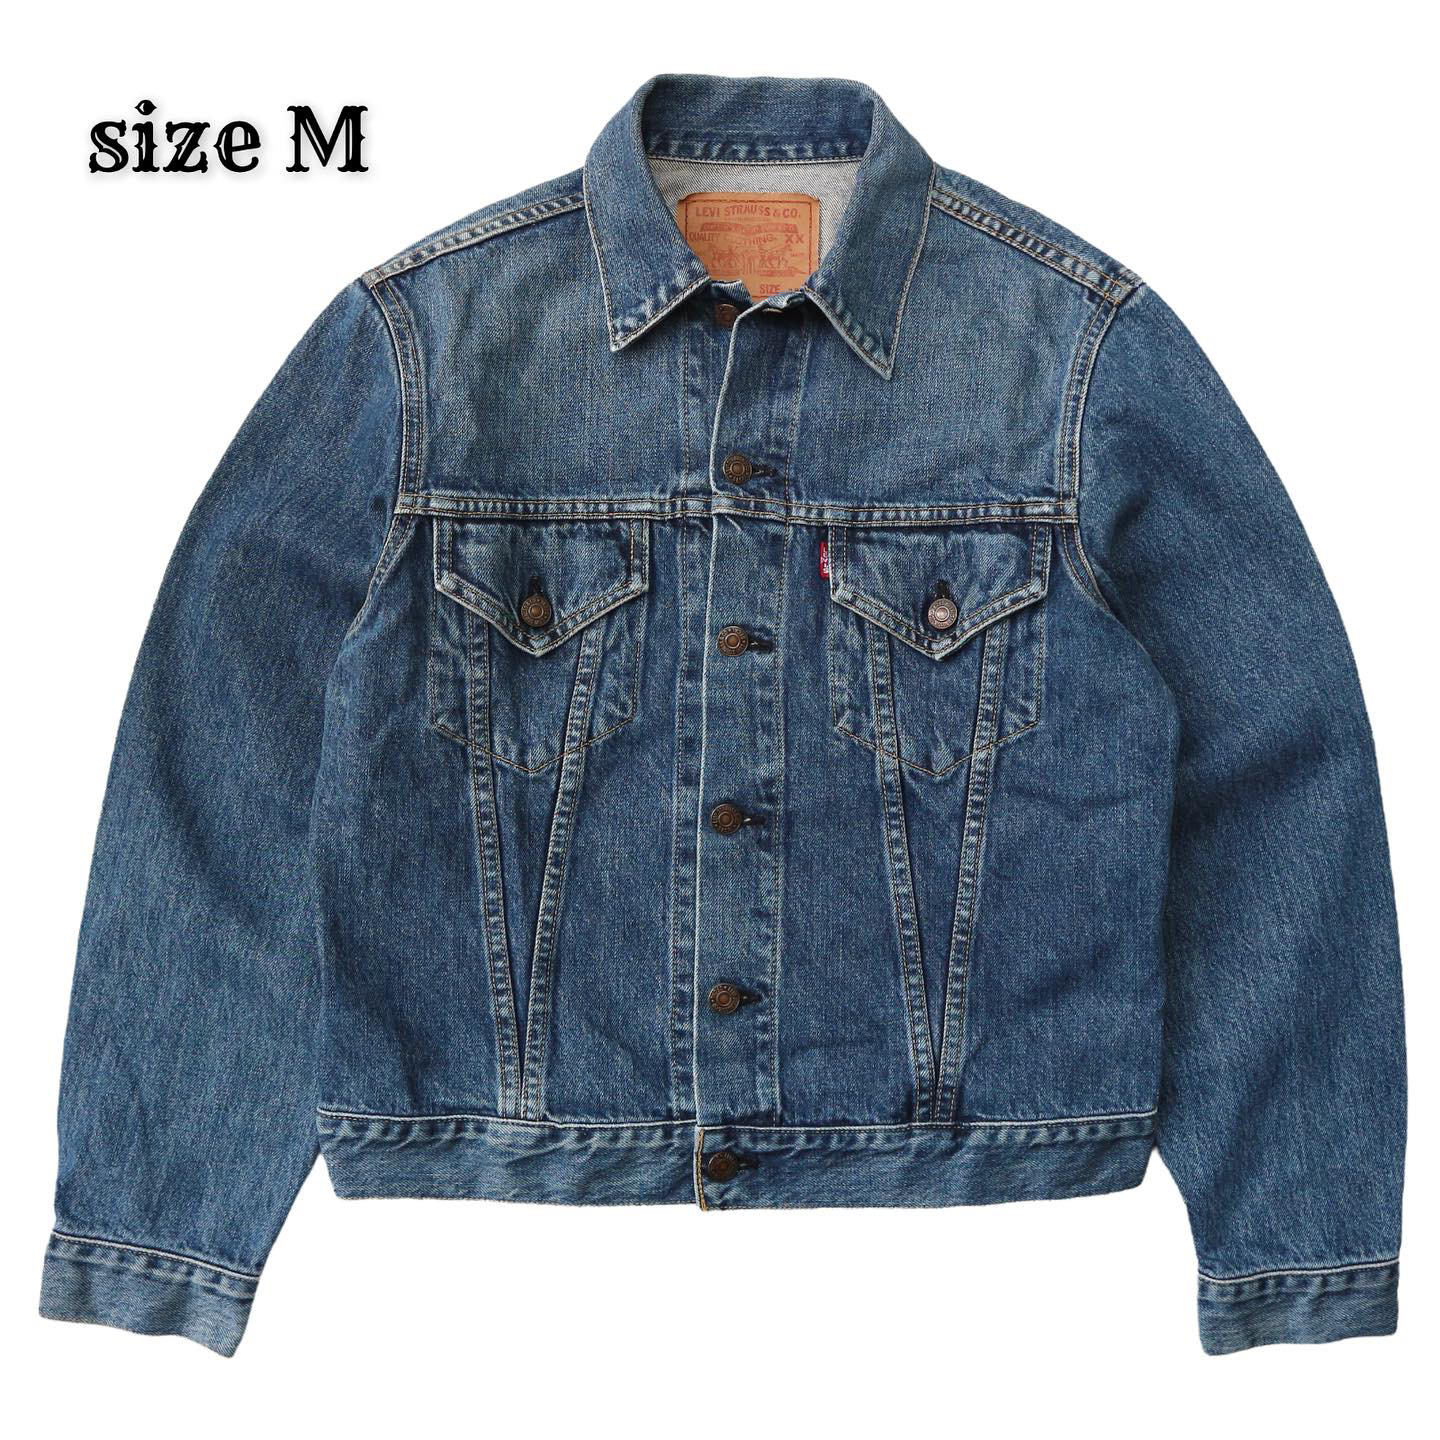 90s LEVI’S Type III Denim Jacket Size M